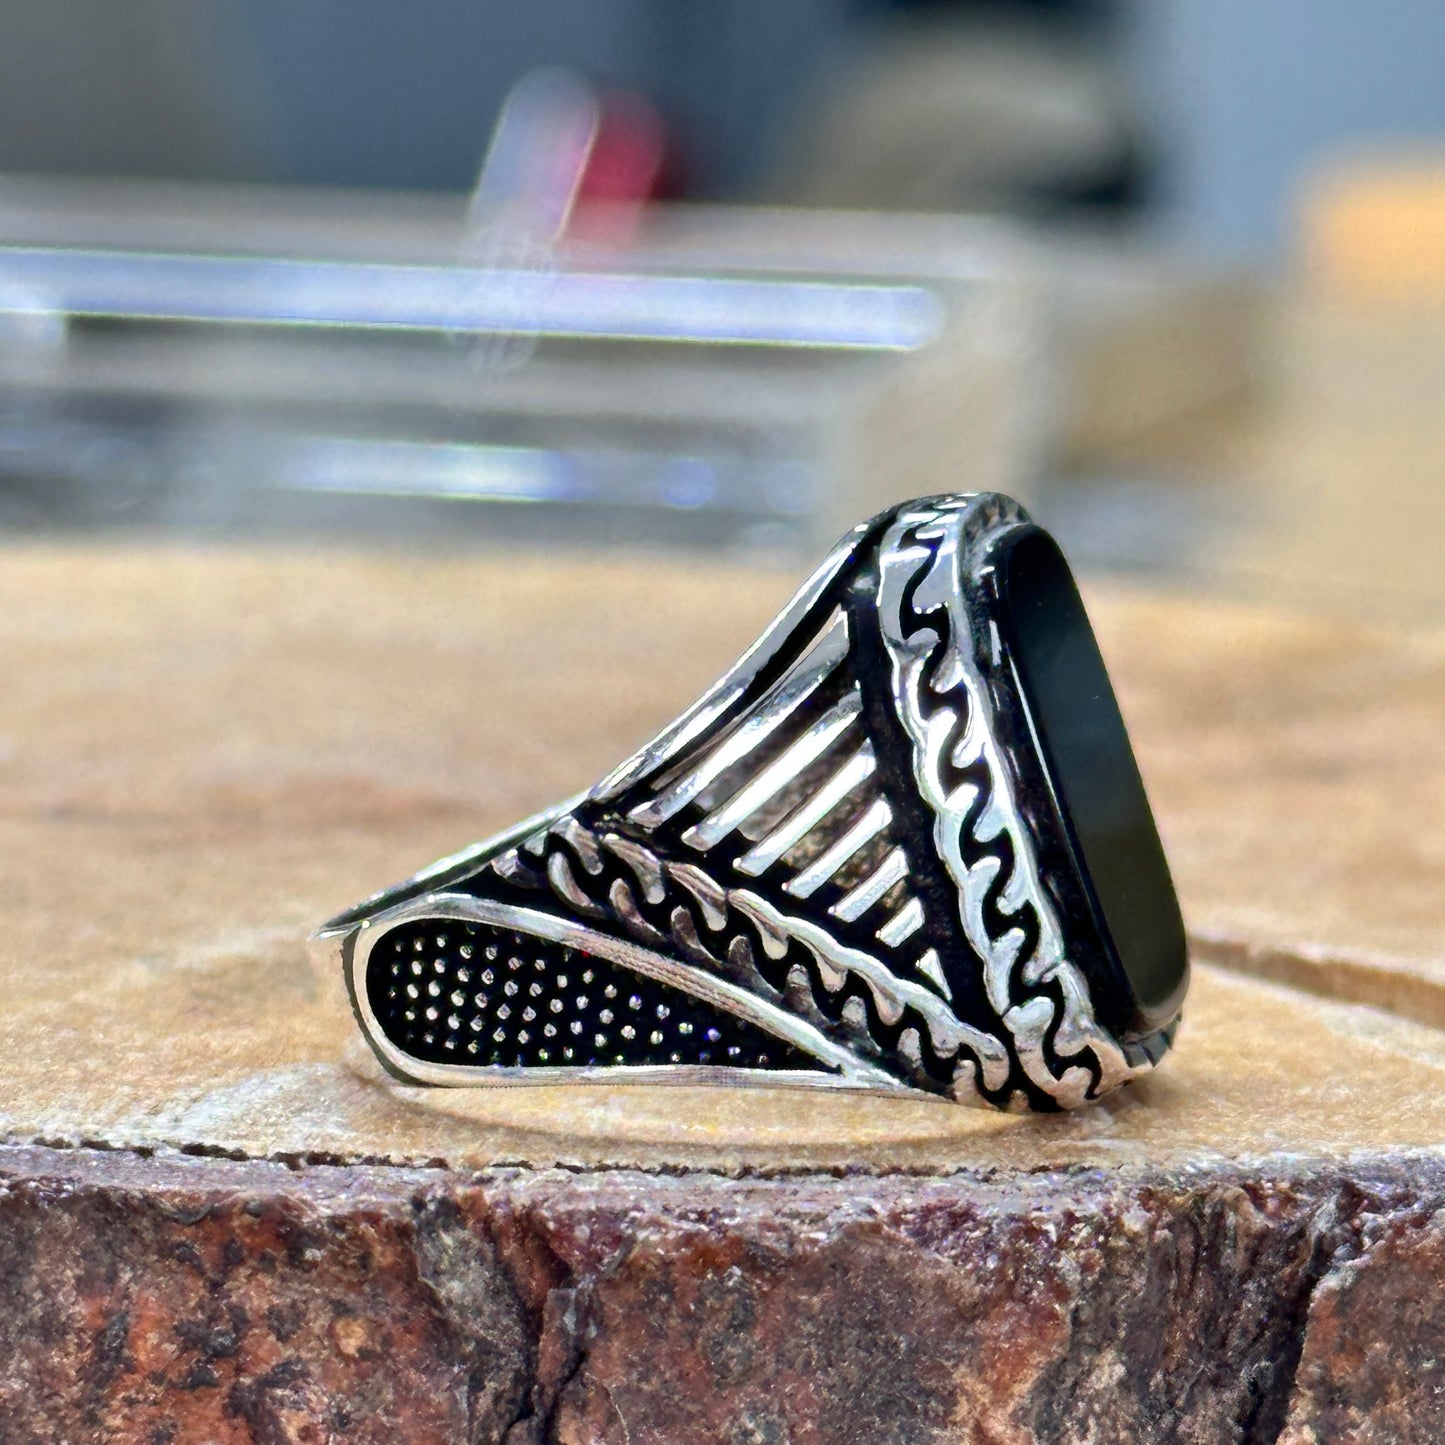 Men Silver Handmade Black Onyx Gemstone Ring